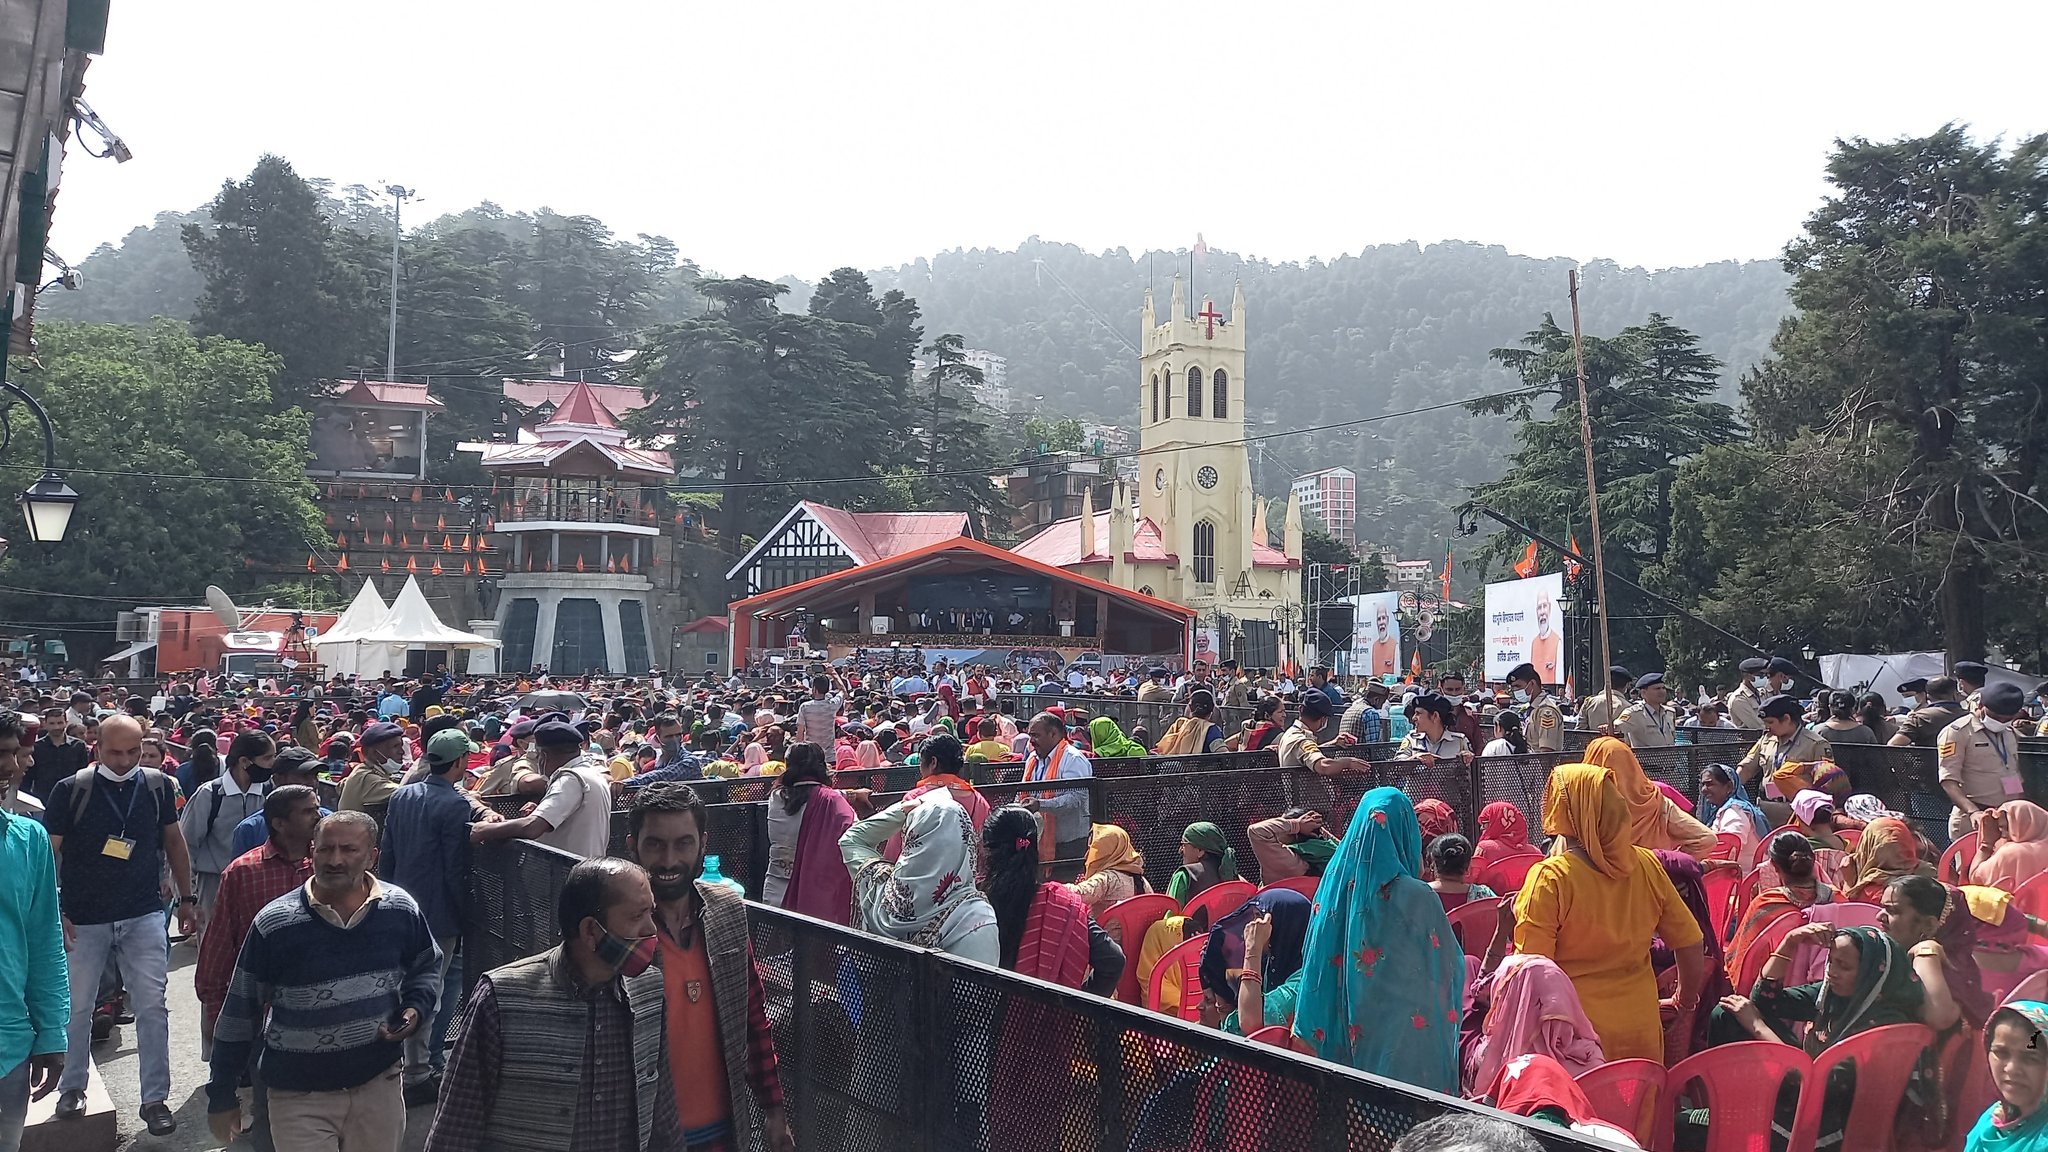 Guru Randhava to add Glamour to Shimla Summer festival